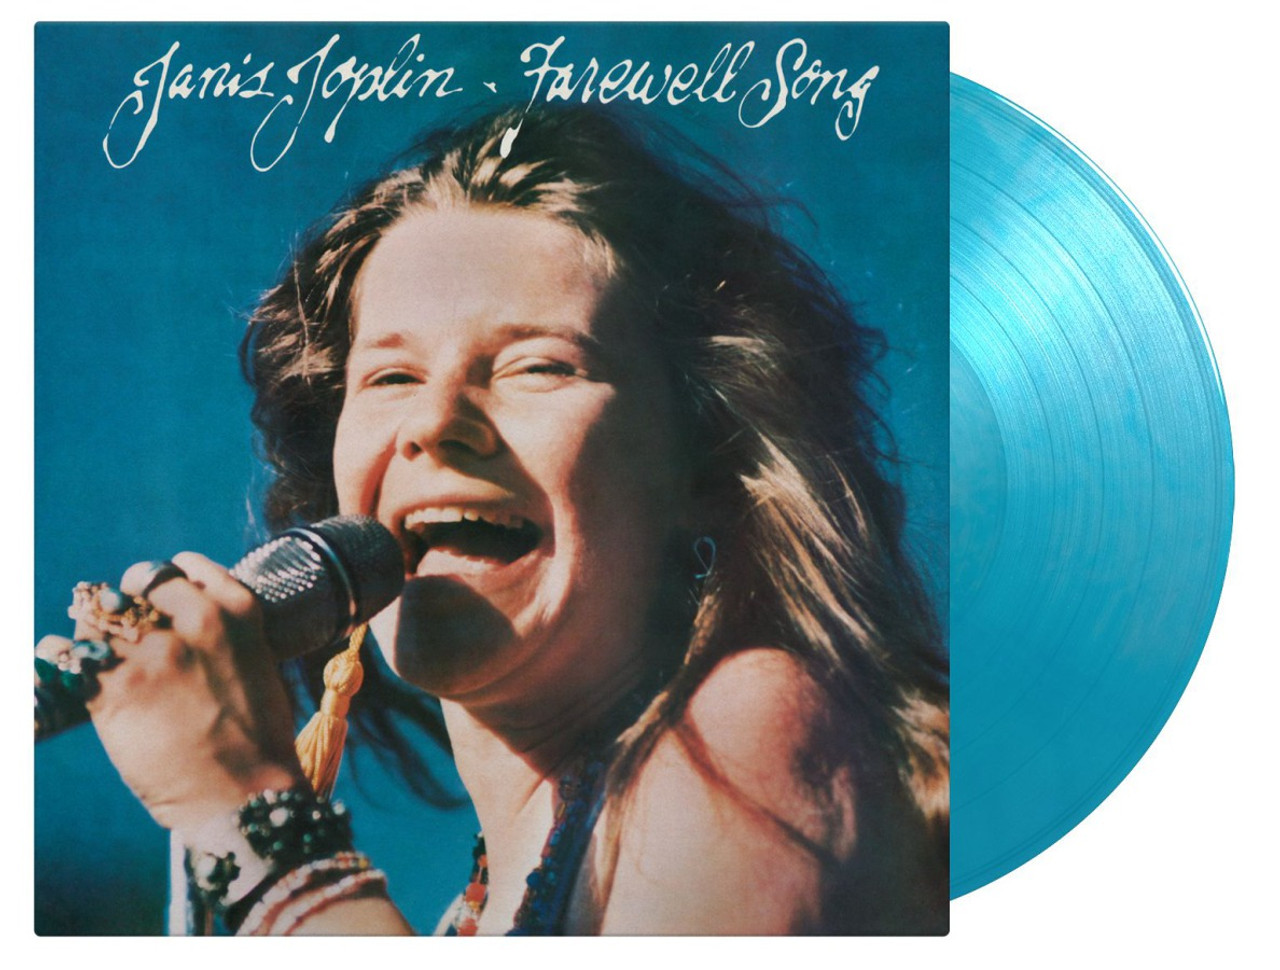 Janis Joplin: albums, songs, playlists